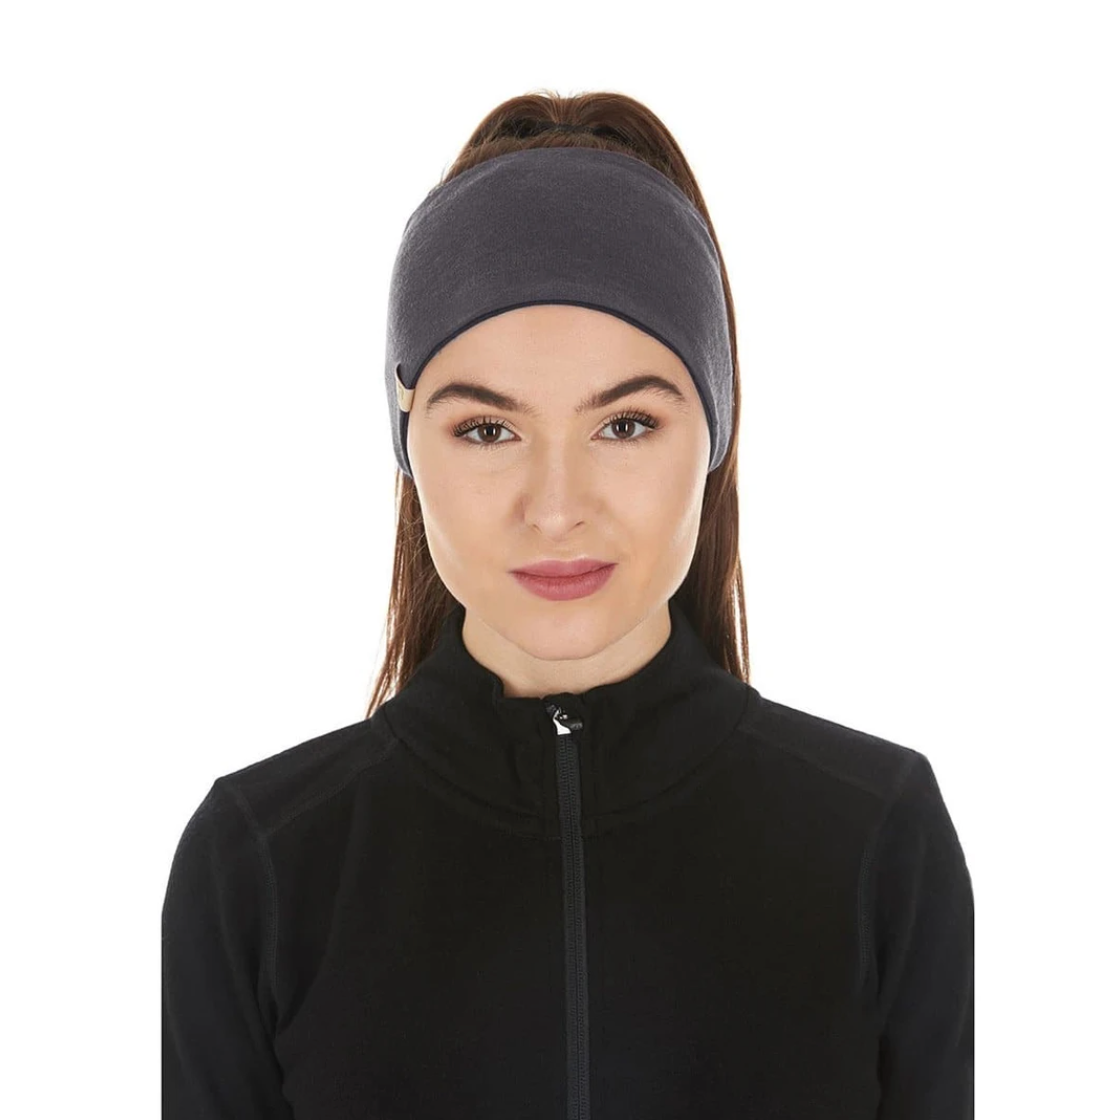 minus33 merino wool reversible headband in black and charcoal on model